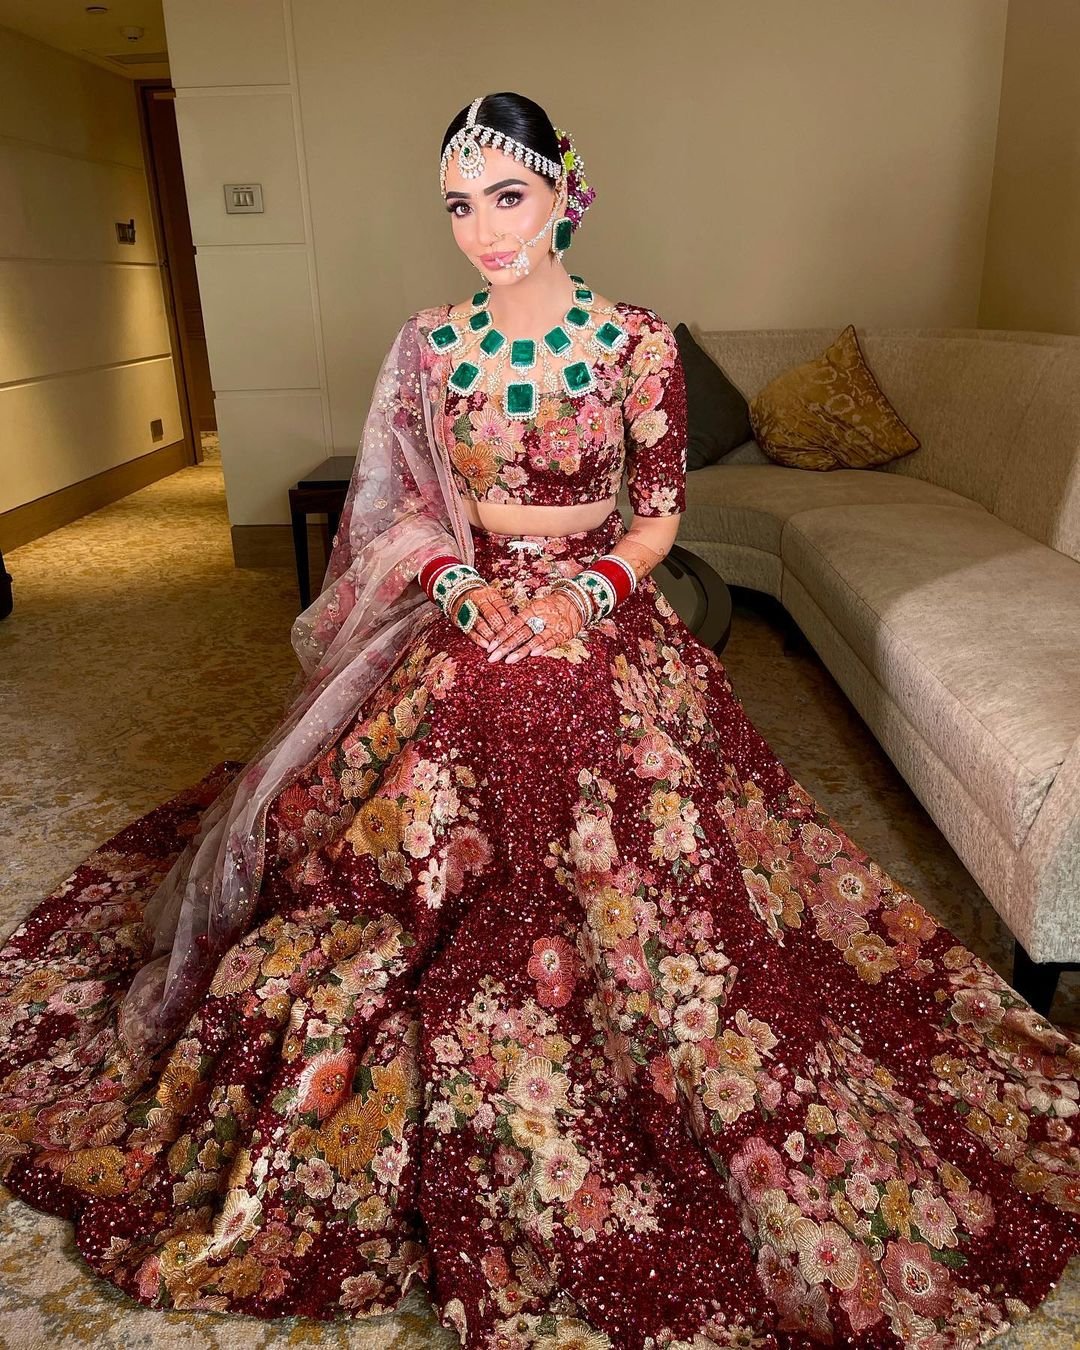 Pakistani brides falling for Indian designers and 'Sharia-compliant' Sabyasachi  lehengas